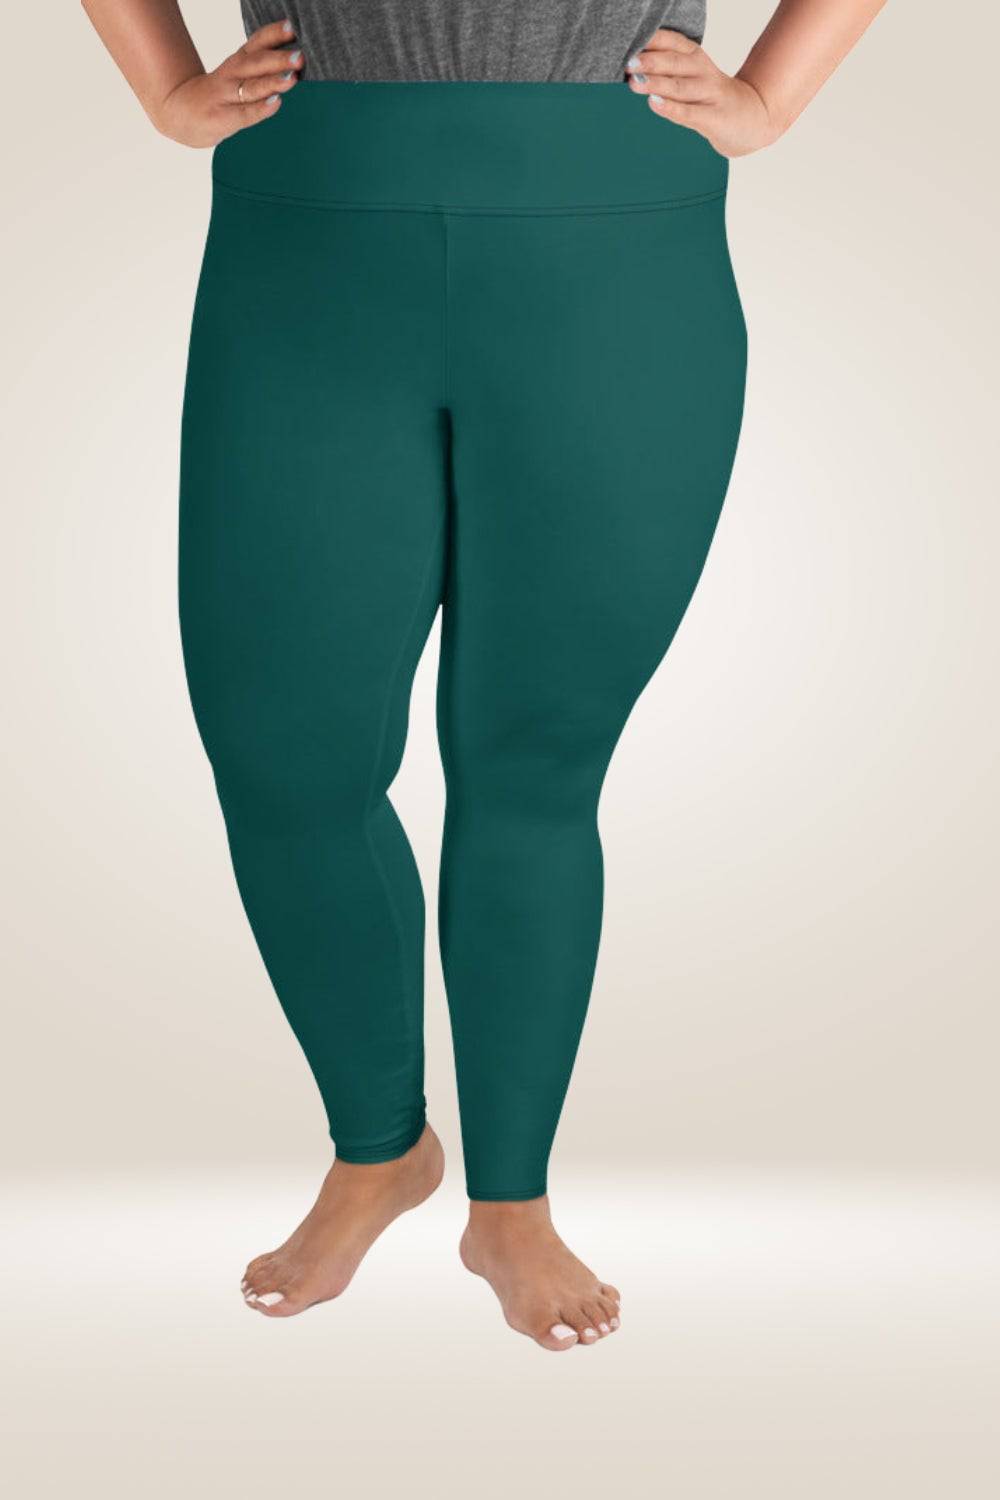 Green Glitter Print Plus Size Leggings - TGC Boutique